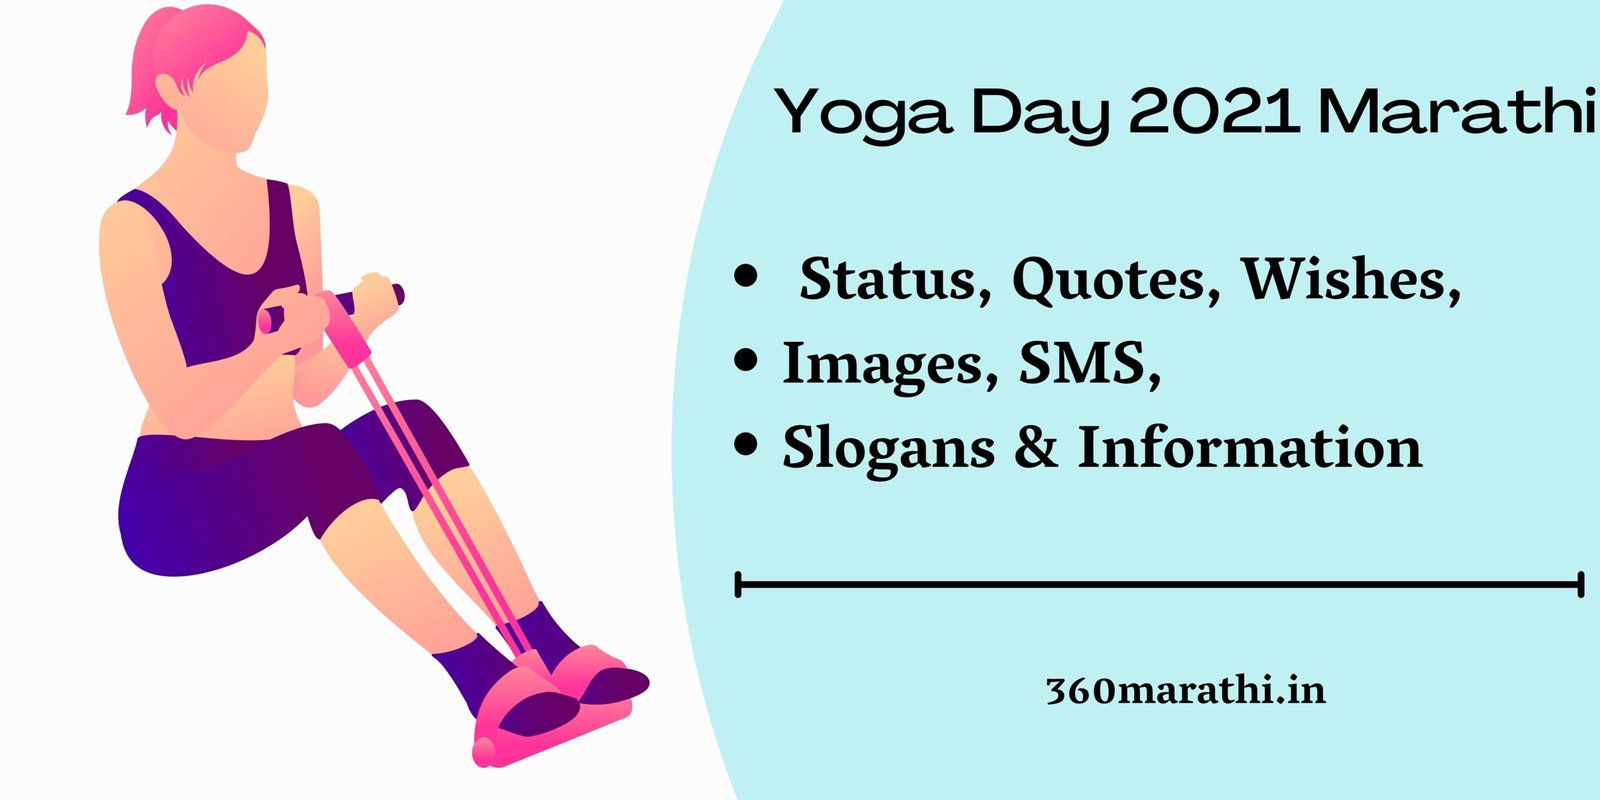 Yoga Day 2021 Marathi Status, Quotes, Wishes, Images, SMS, Slogans & Information